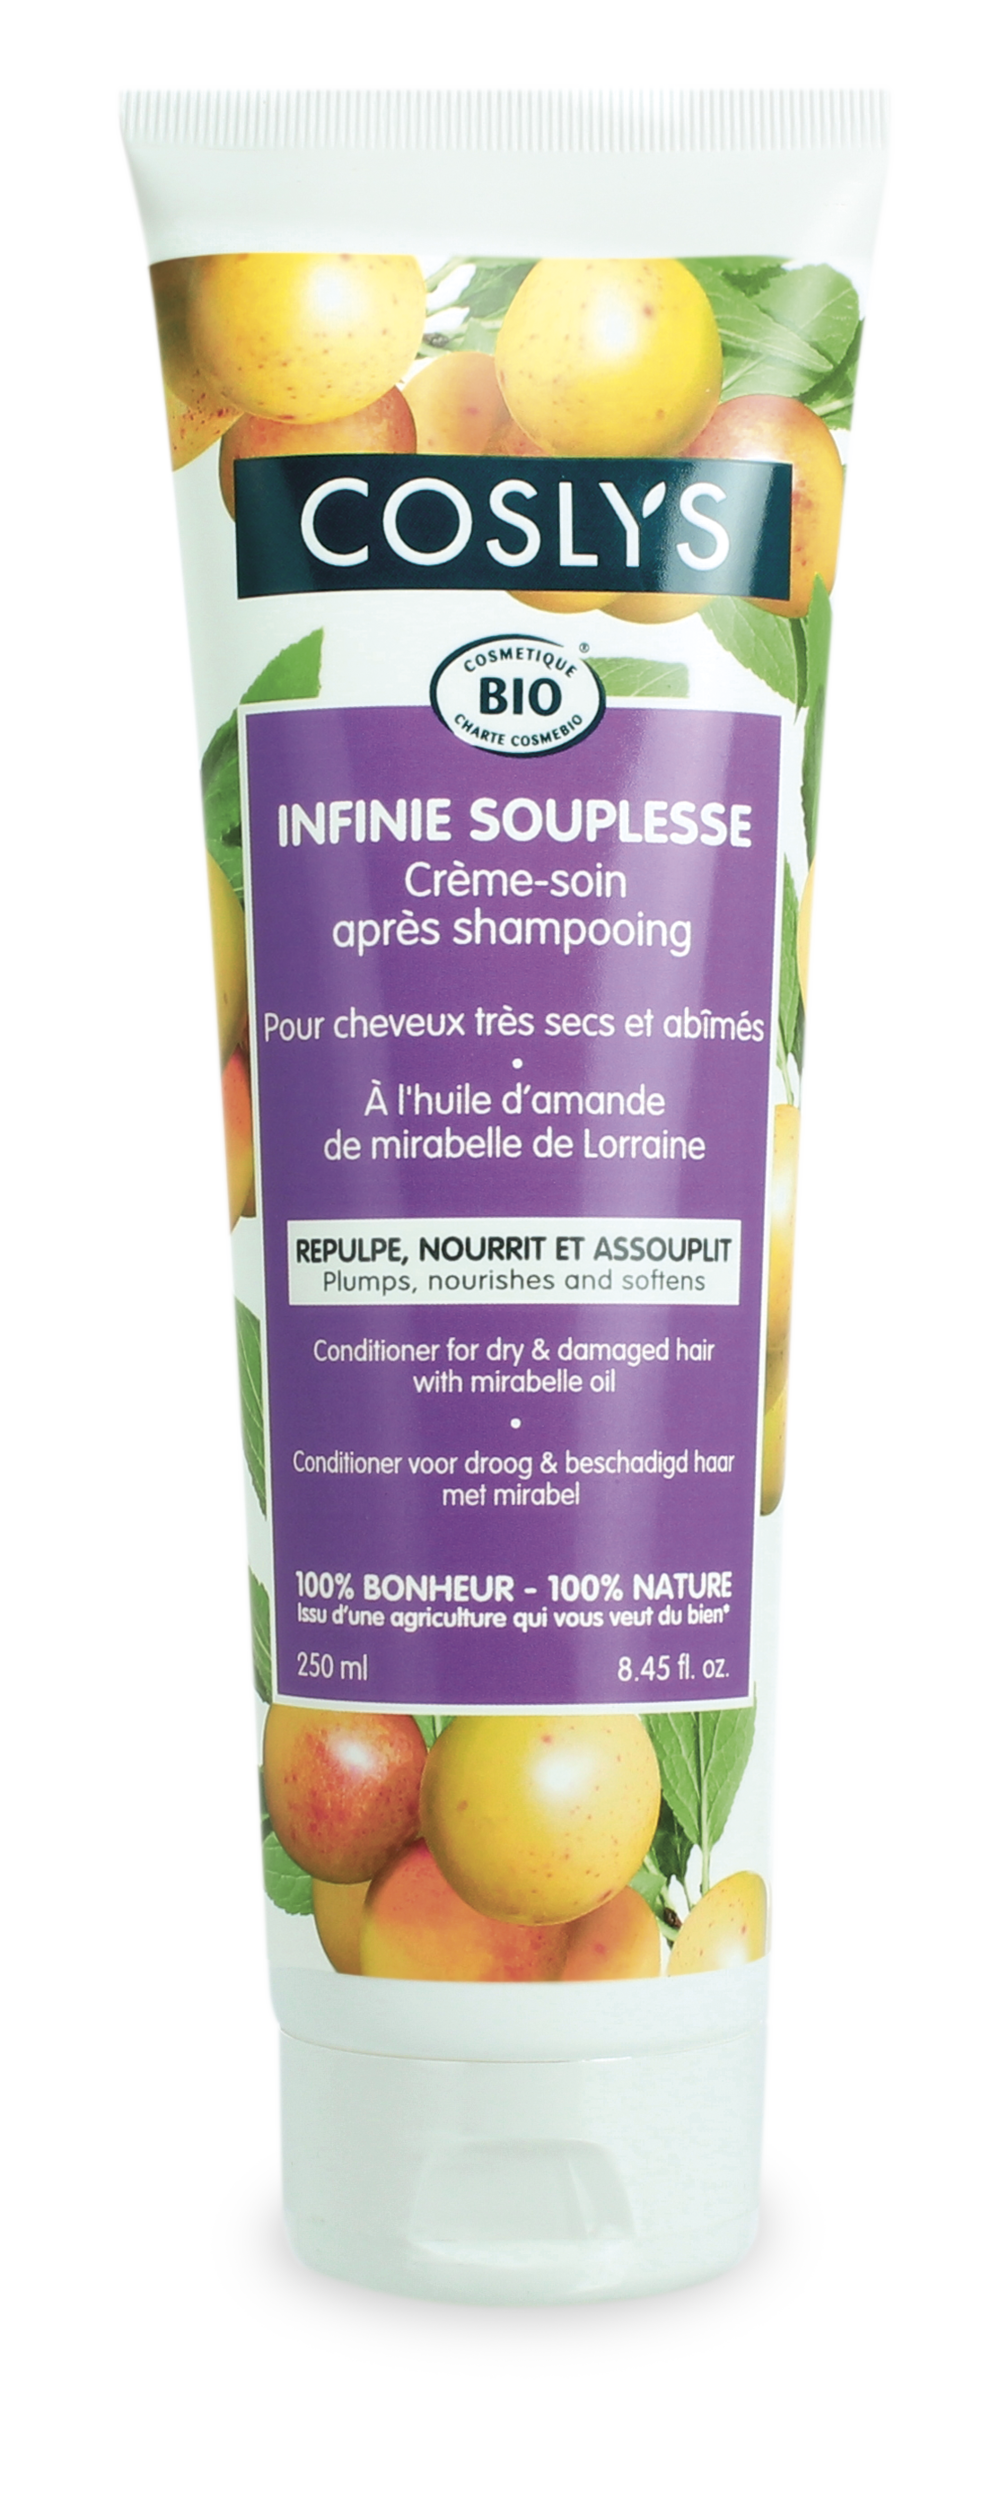 Coslys-Apres shampoing cheveux sec 250ml